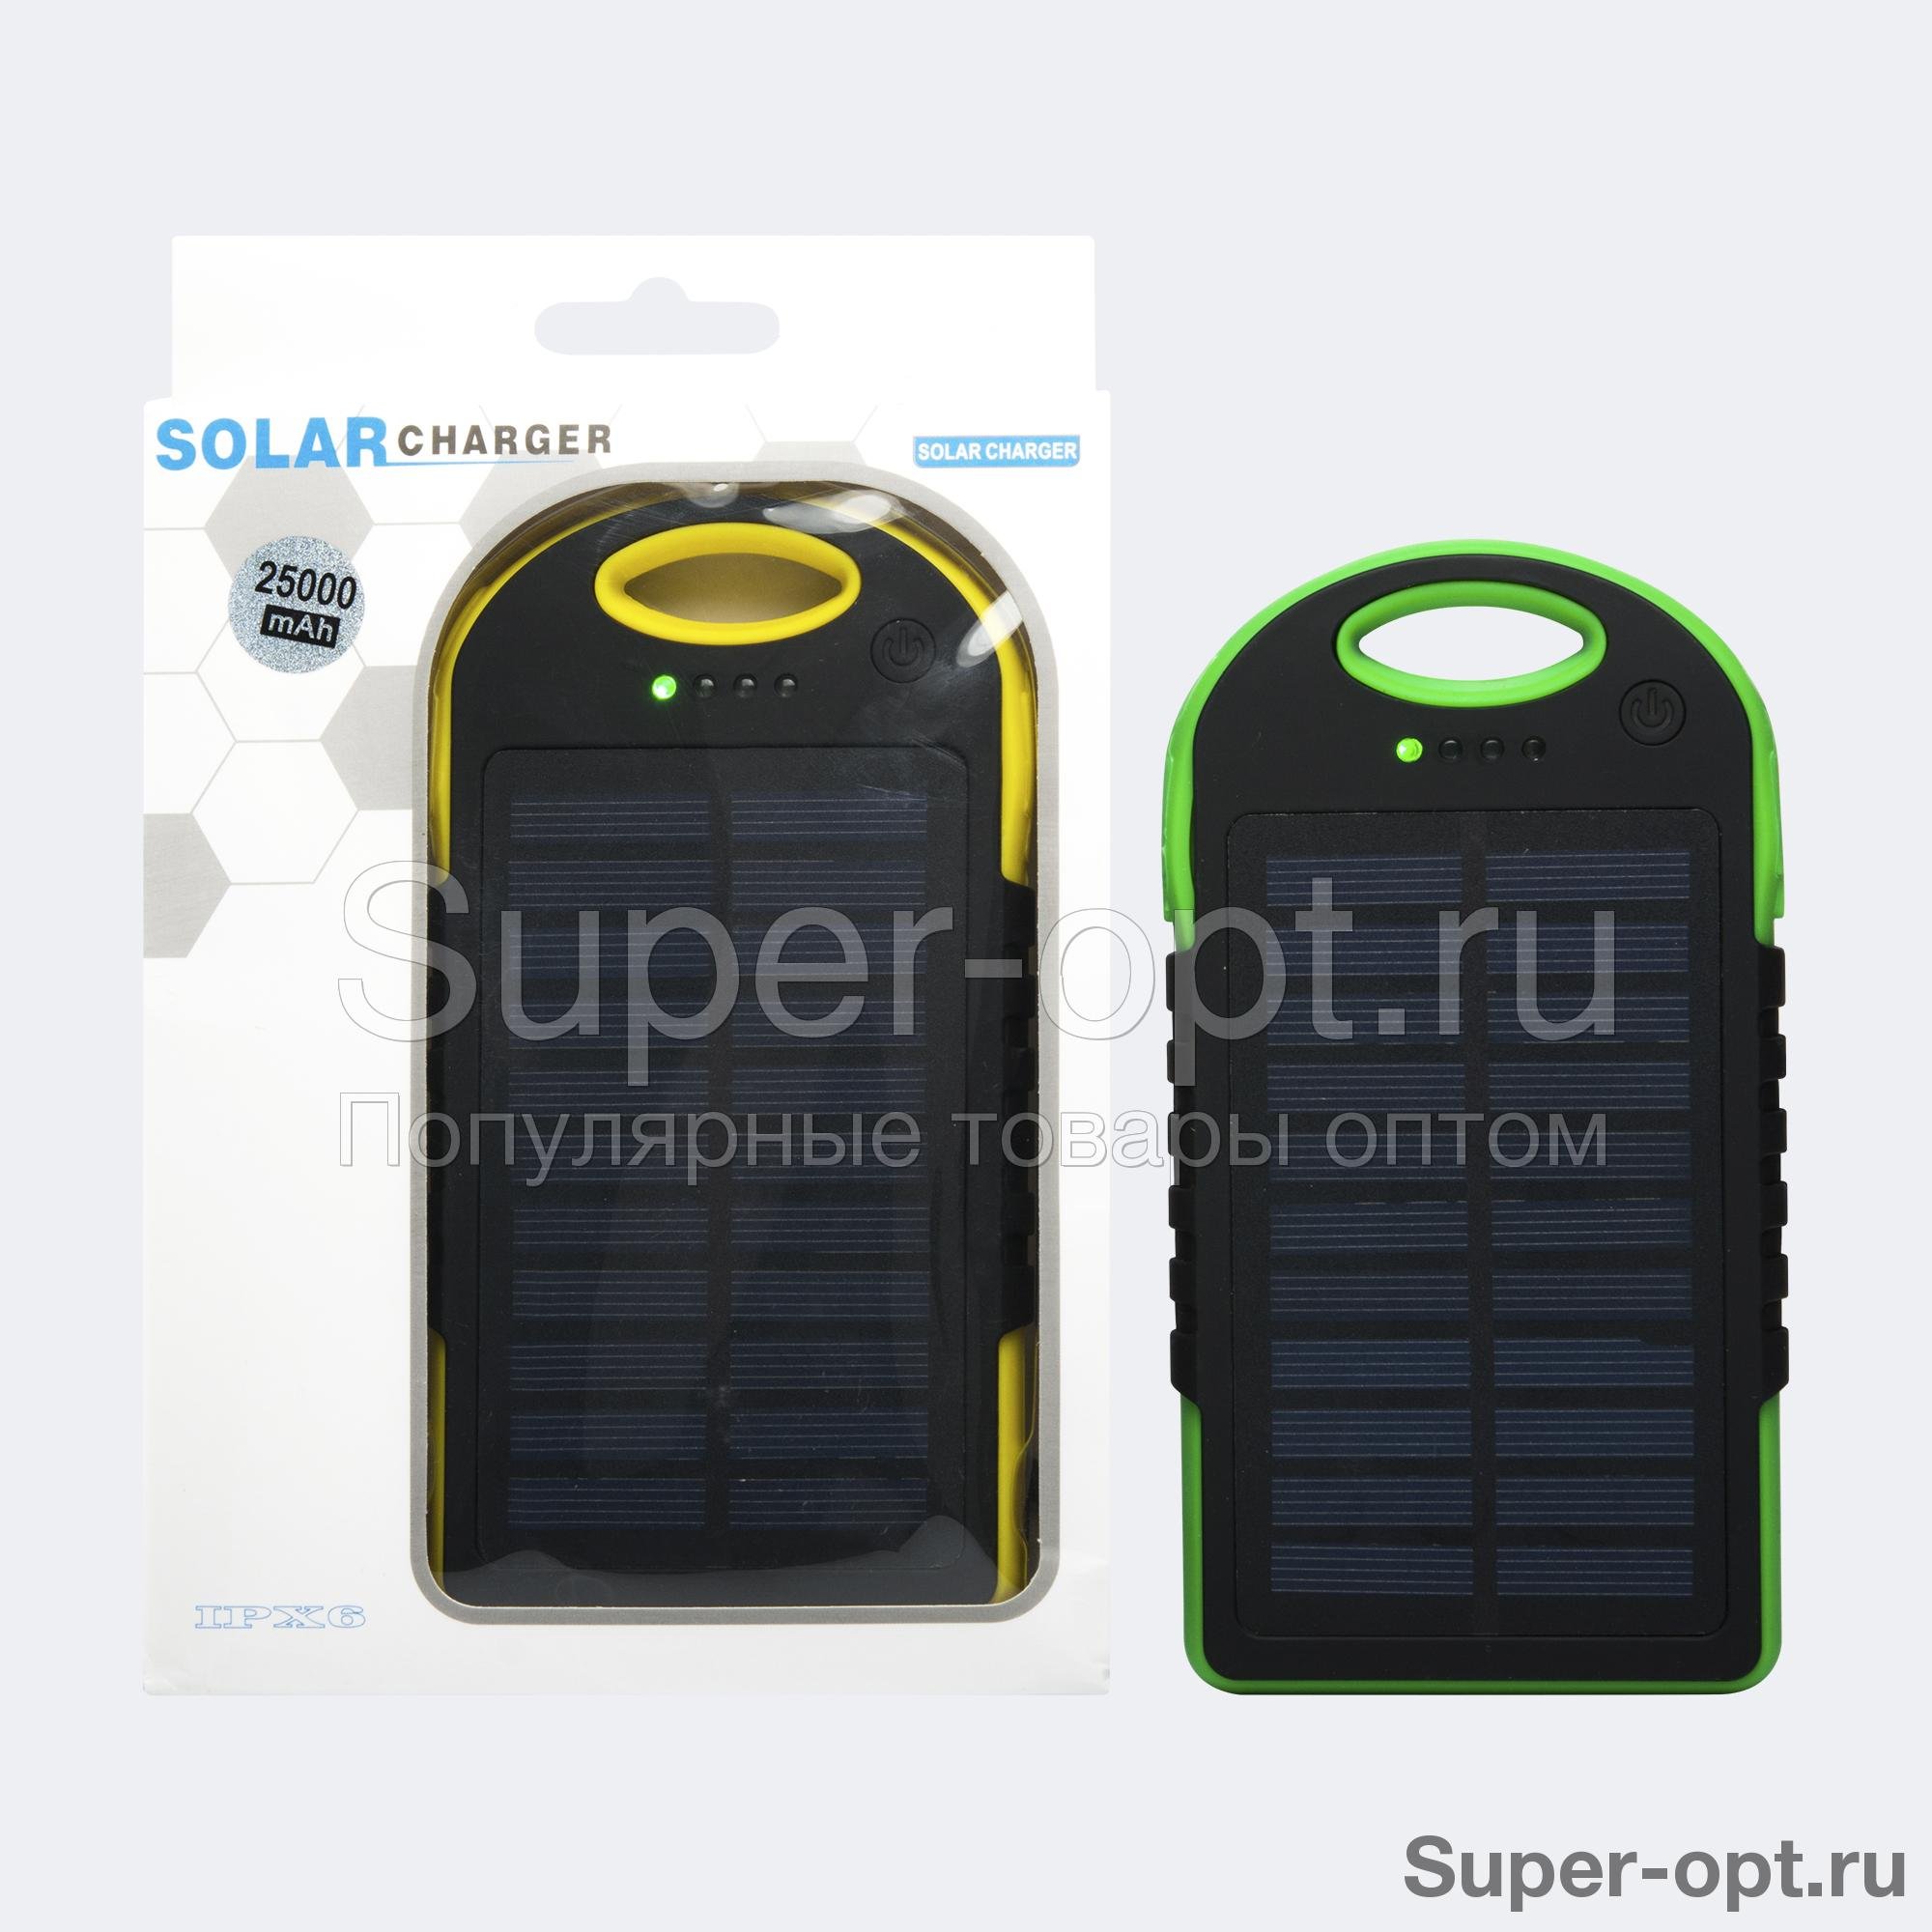 Power Bank на солнечных батареях Solar Charger 25000 mAh